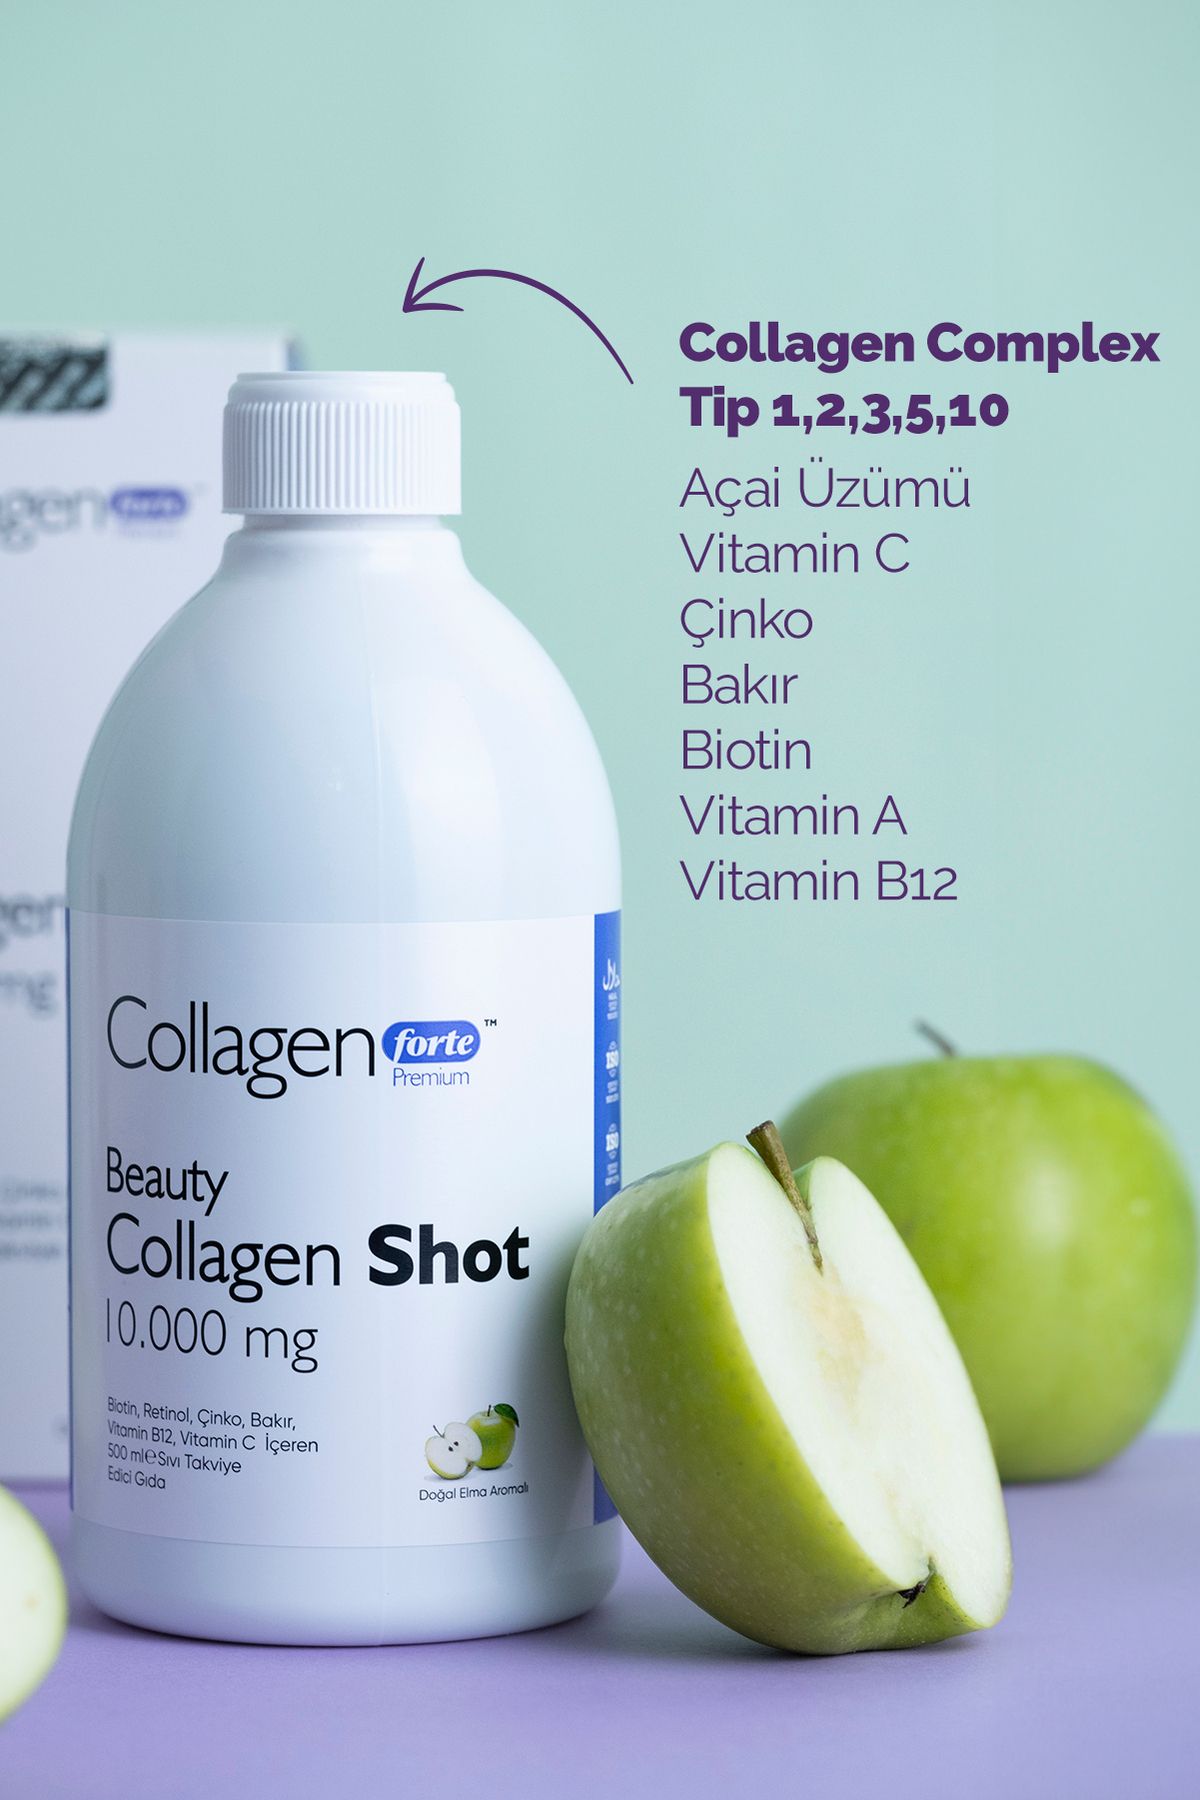 Collagen Forte Platinum Collagen Shot 500ml, 5 Tip Sıvı Kolajen, Biotin, Vitamin B12, Vitamin C, Bakır, Retinol & Çinko